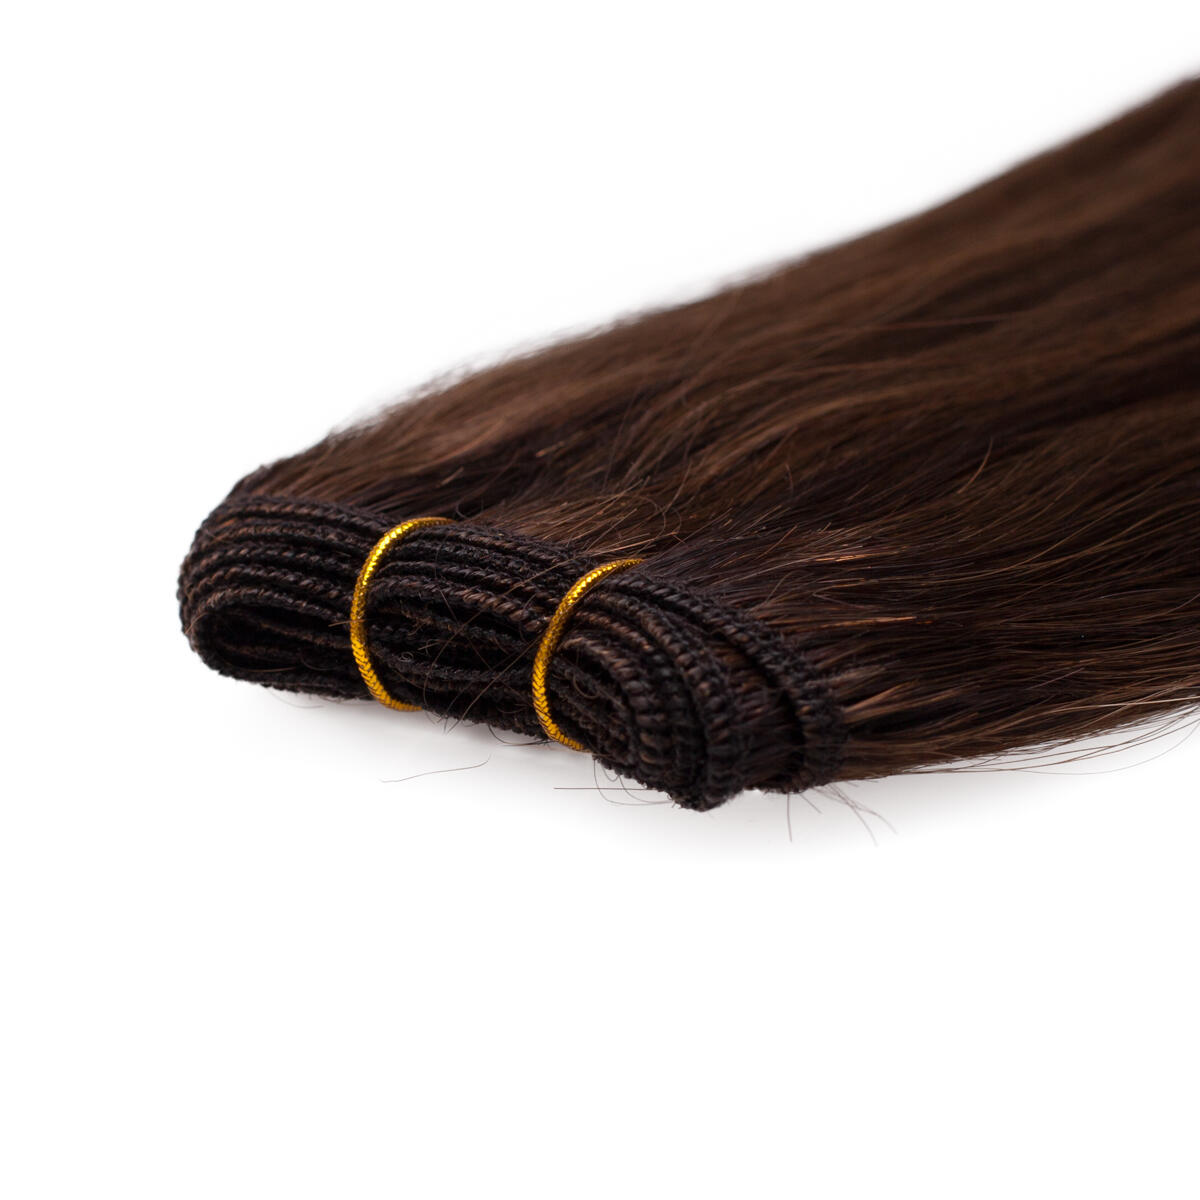 Hair Weft Original M2.3/5.0 Chocolate Mix 50 cm